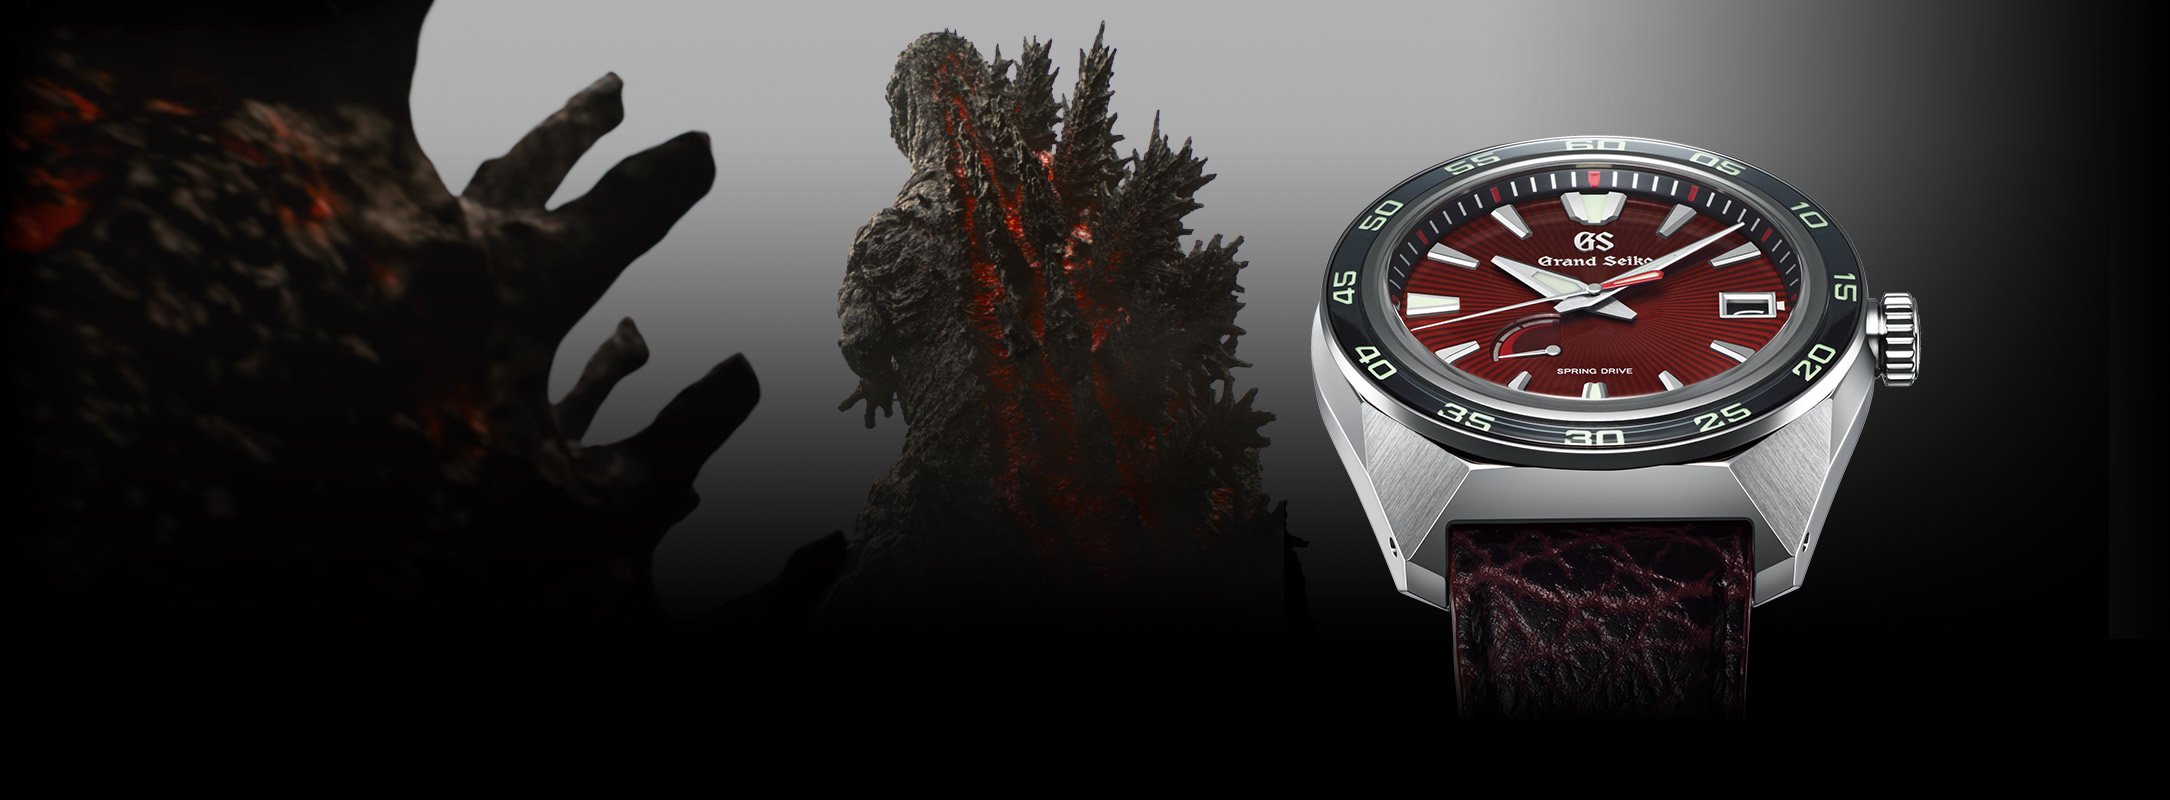 Grand Seiko Sport Collection Godzilla 65th Anniversary Limited Edition -  Timepieces Blog